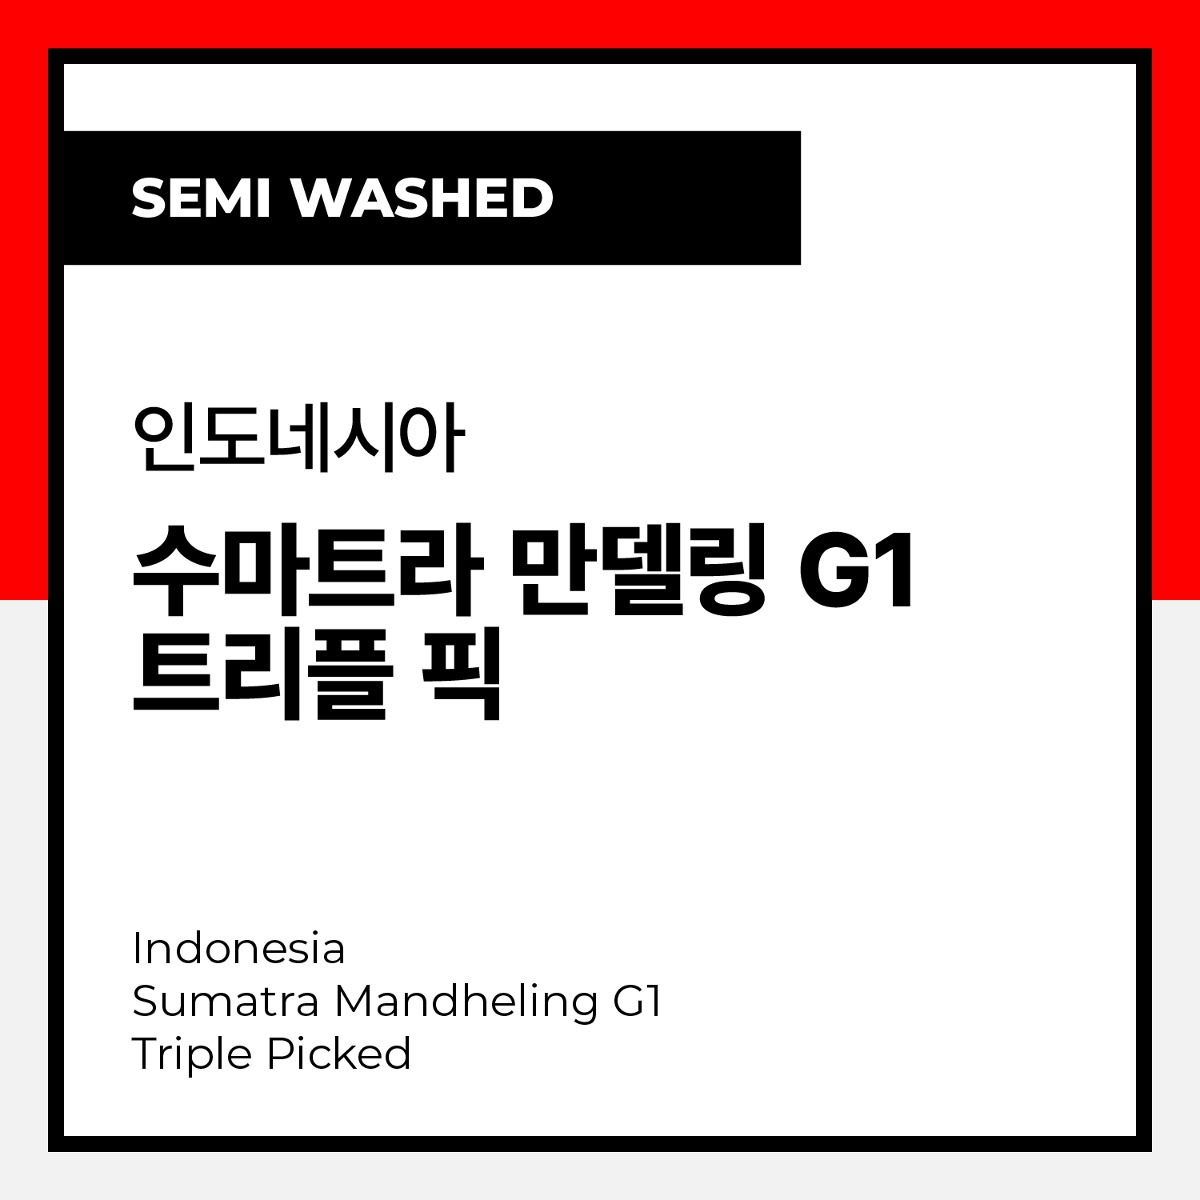 Indonesia Sumatra Mandheling G1 Triple Picked (Semi Washed) 인도네시아 수마트라 만델링 G1 트리플 픽 (세미 워시드)